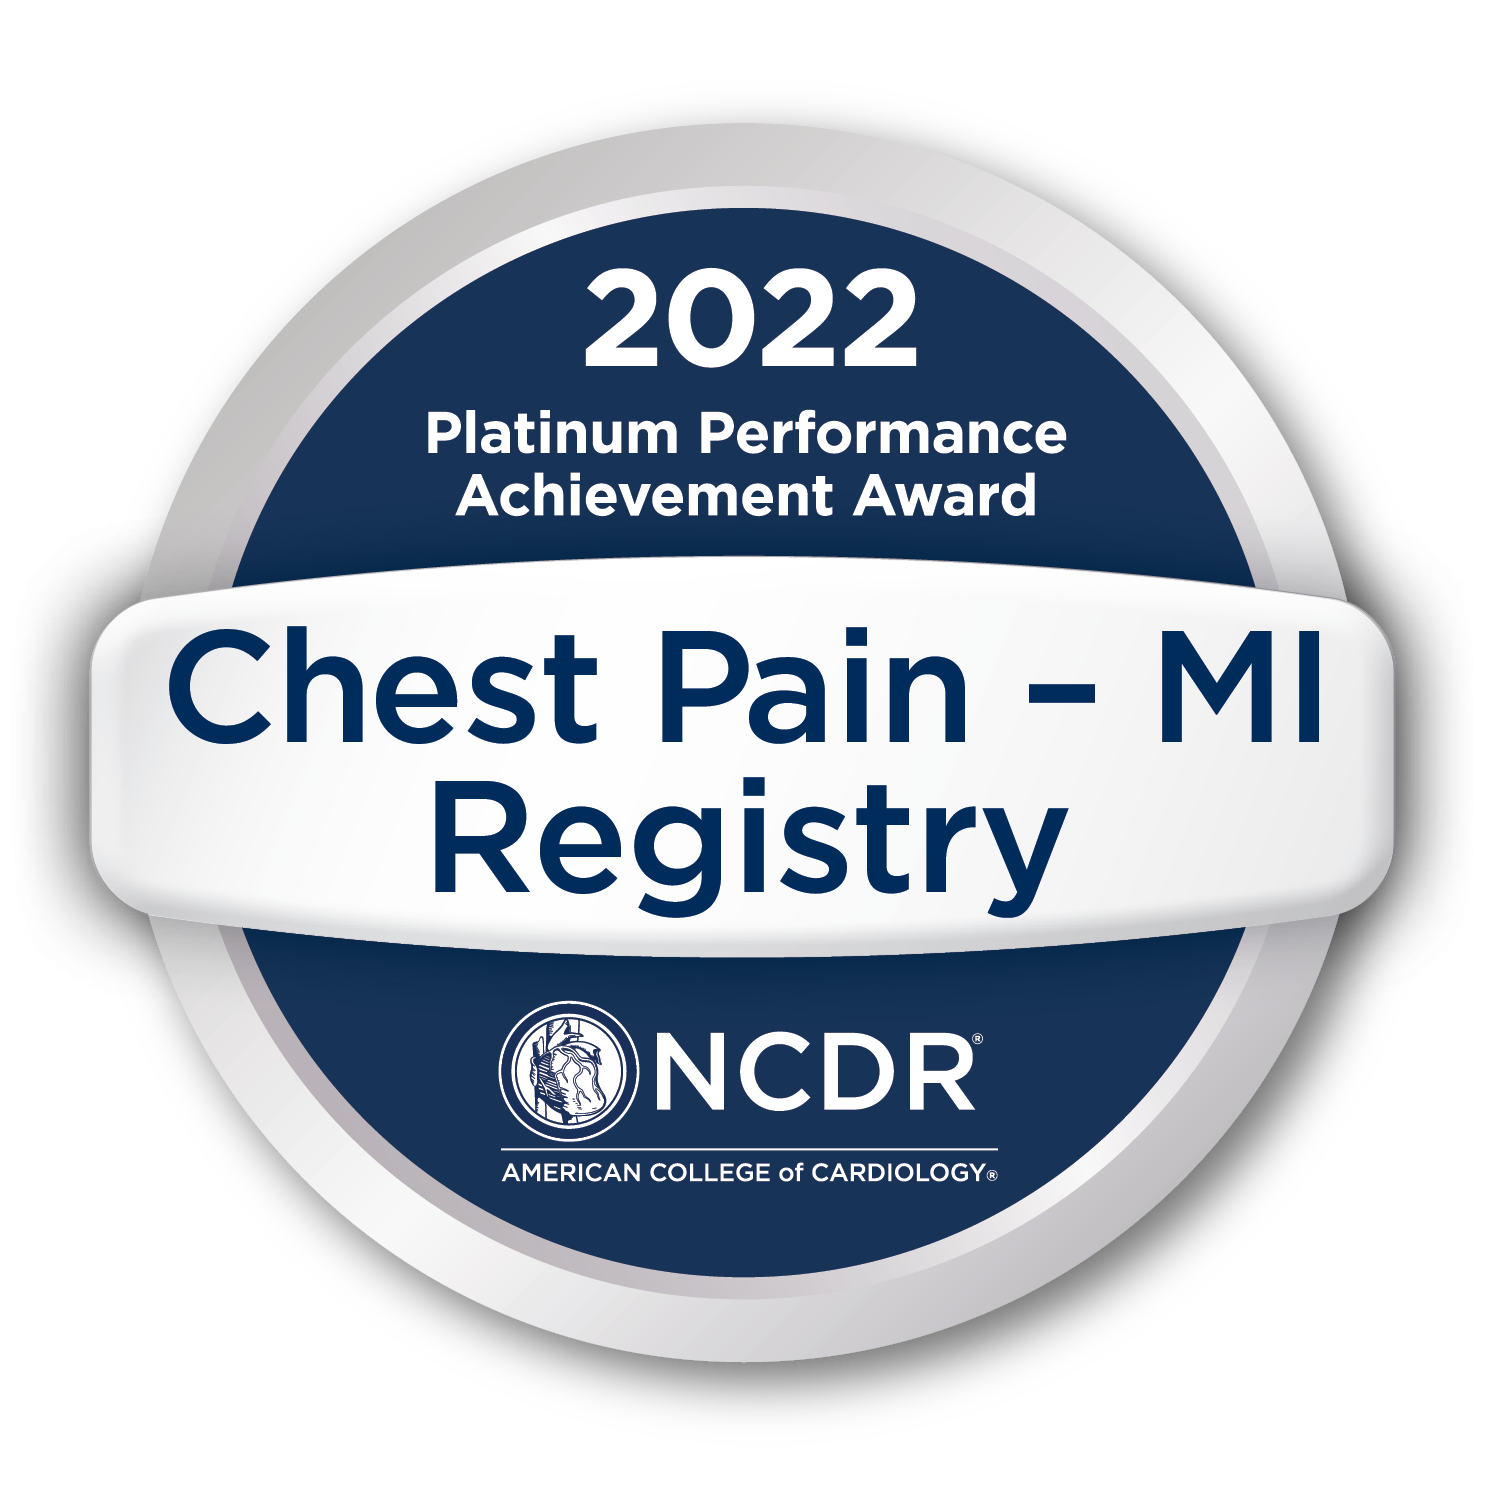 Chest Pain -Registry Performance Achievement Award